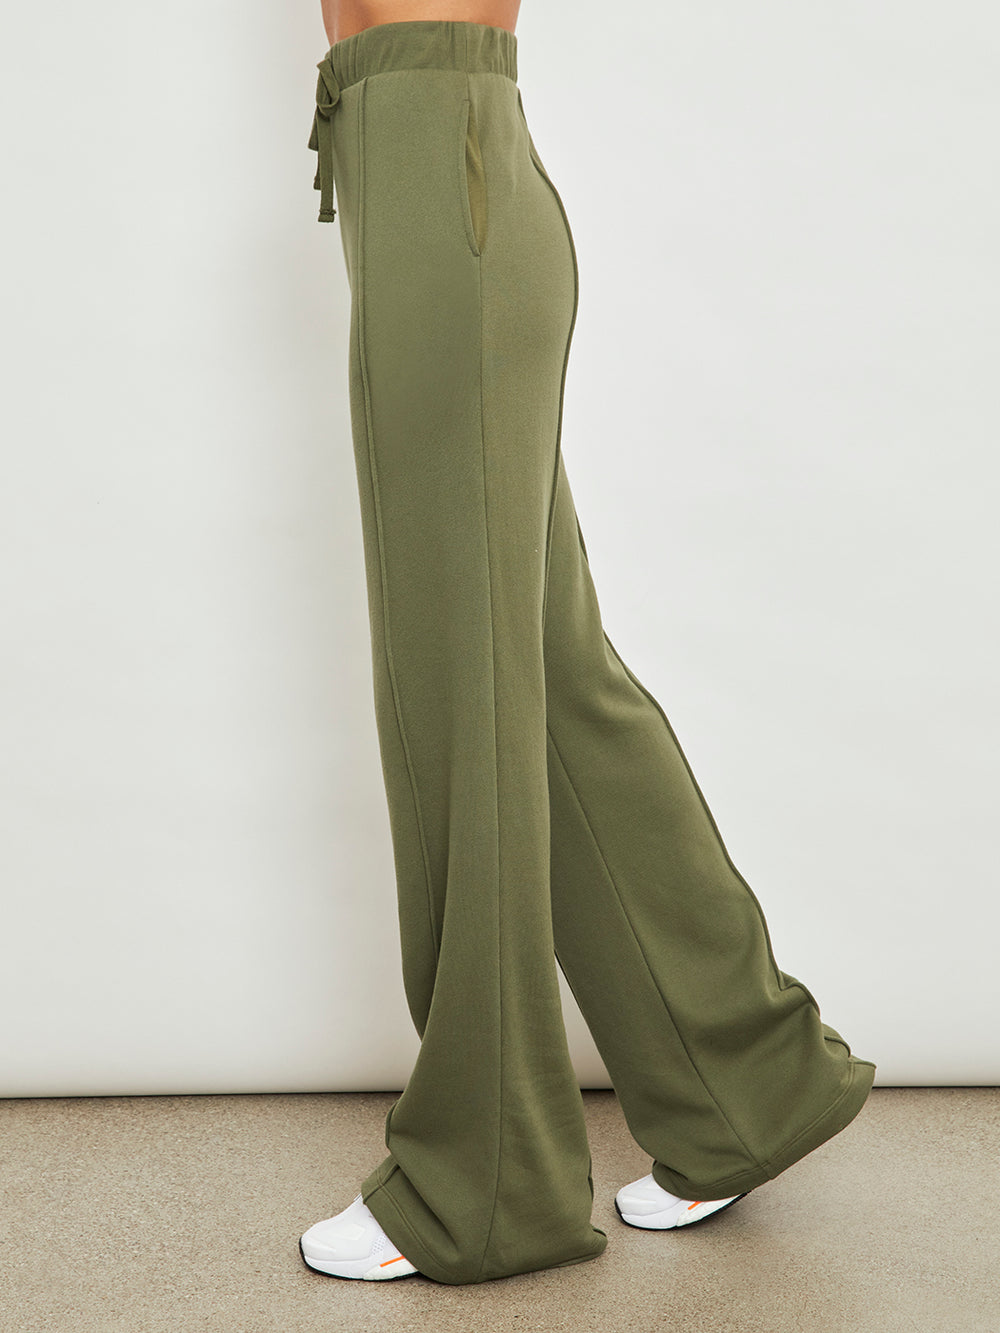 Green Wide Leg Trousers|241012203-Ivy-Green